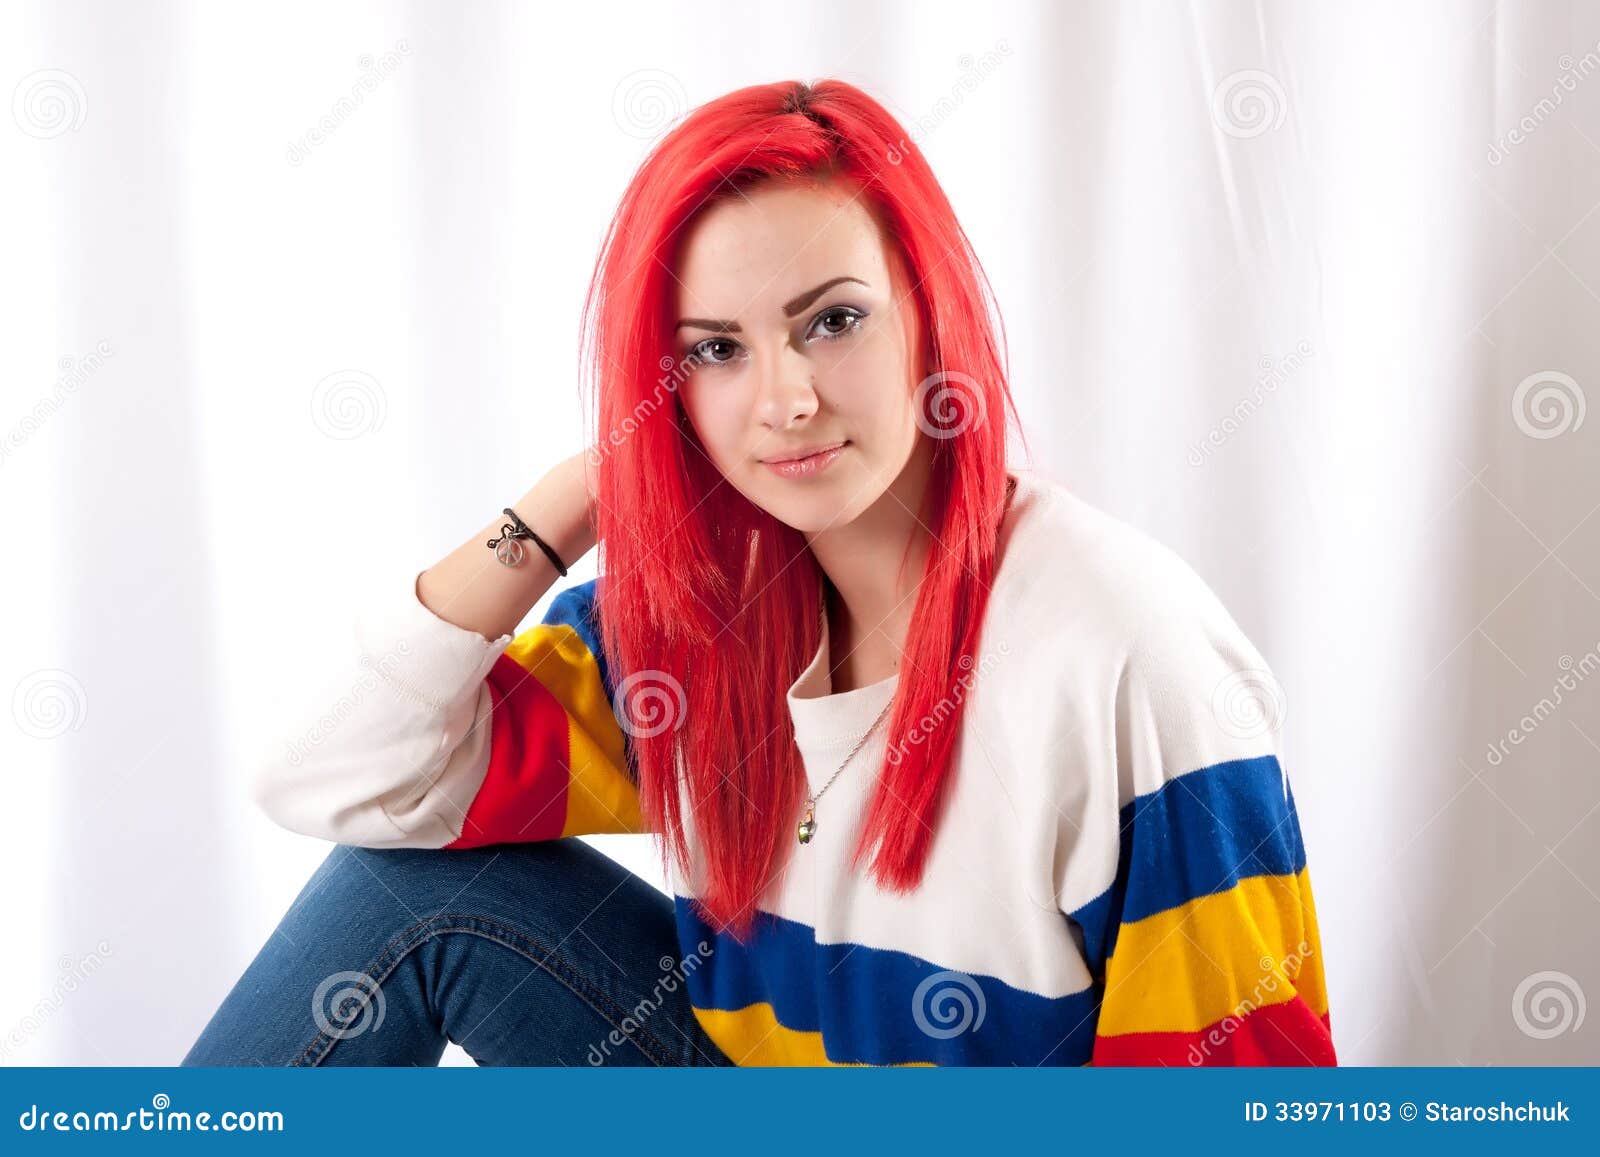 girl glowing red hair